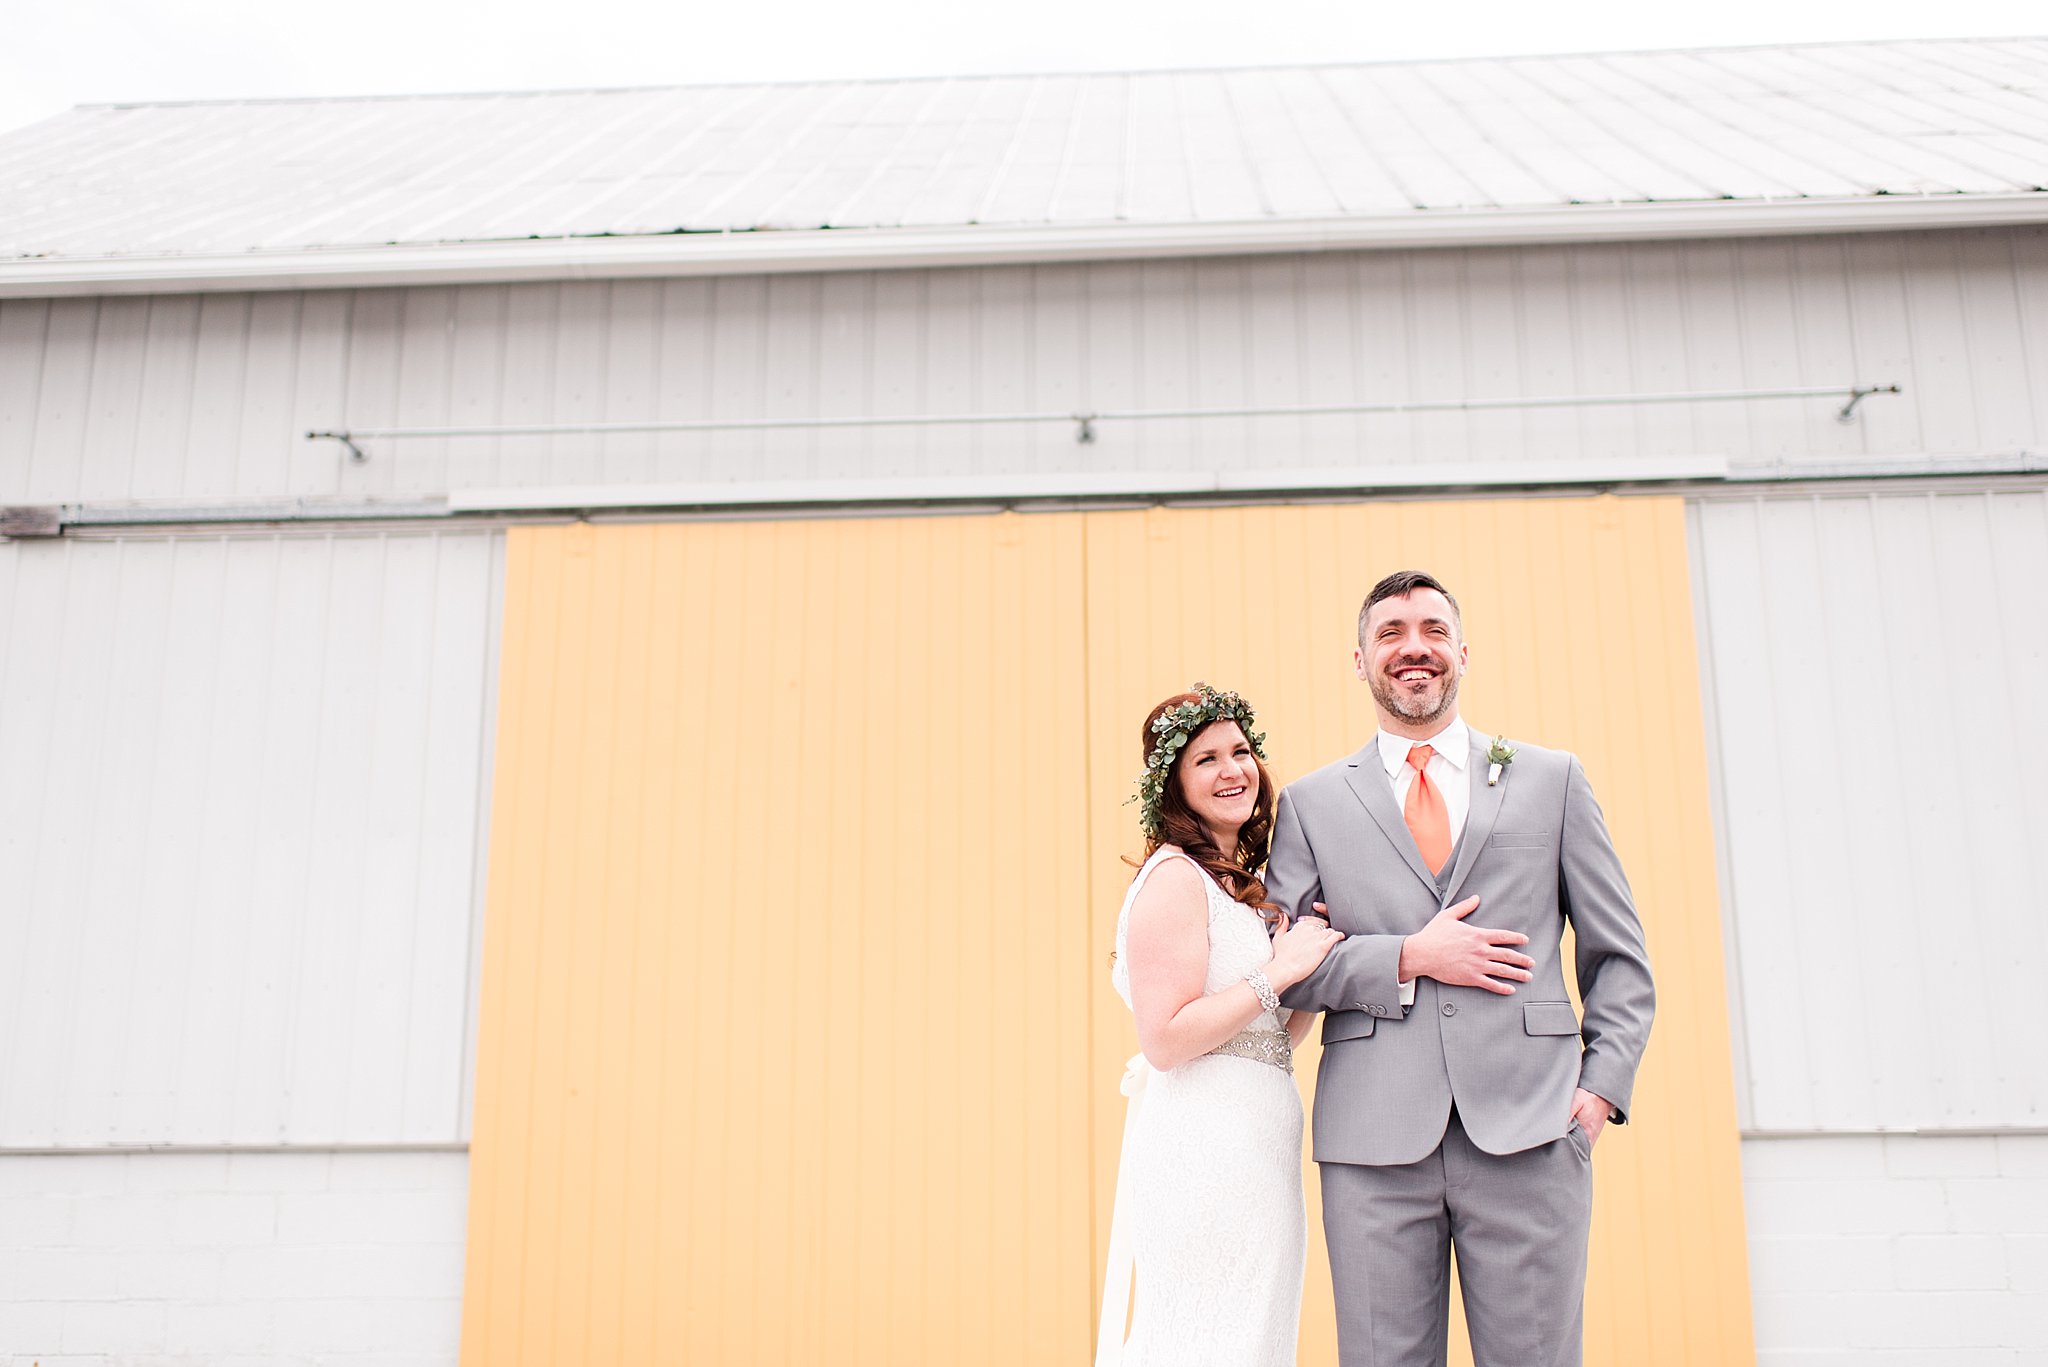 Jorgensen Farms Wedding — The Historic Barn